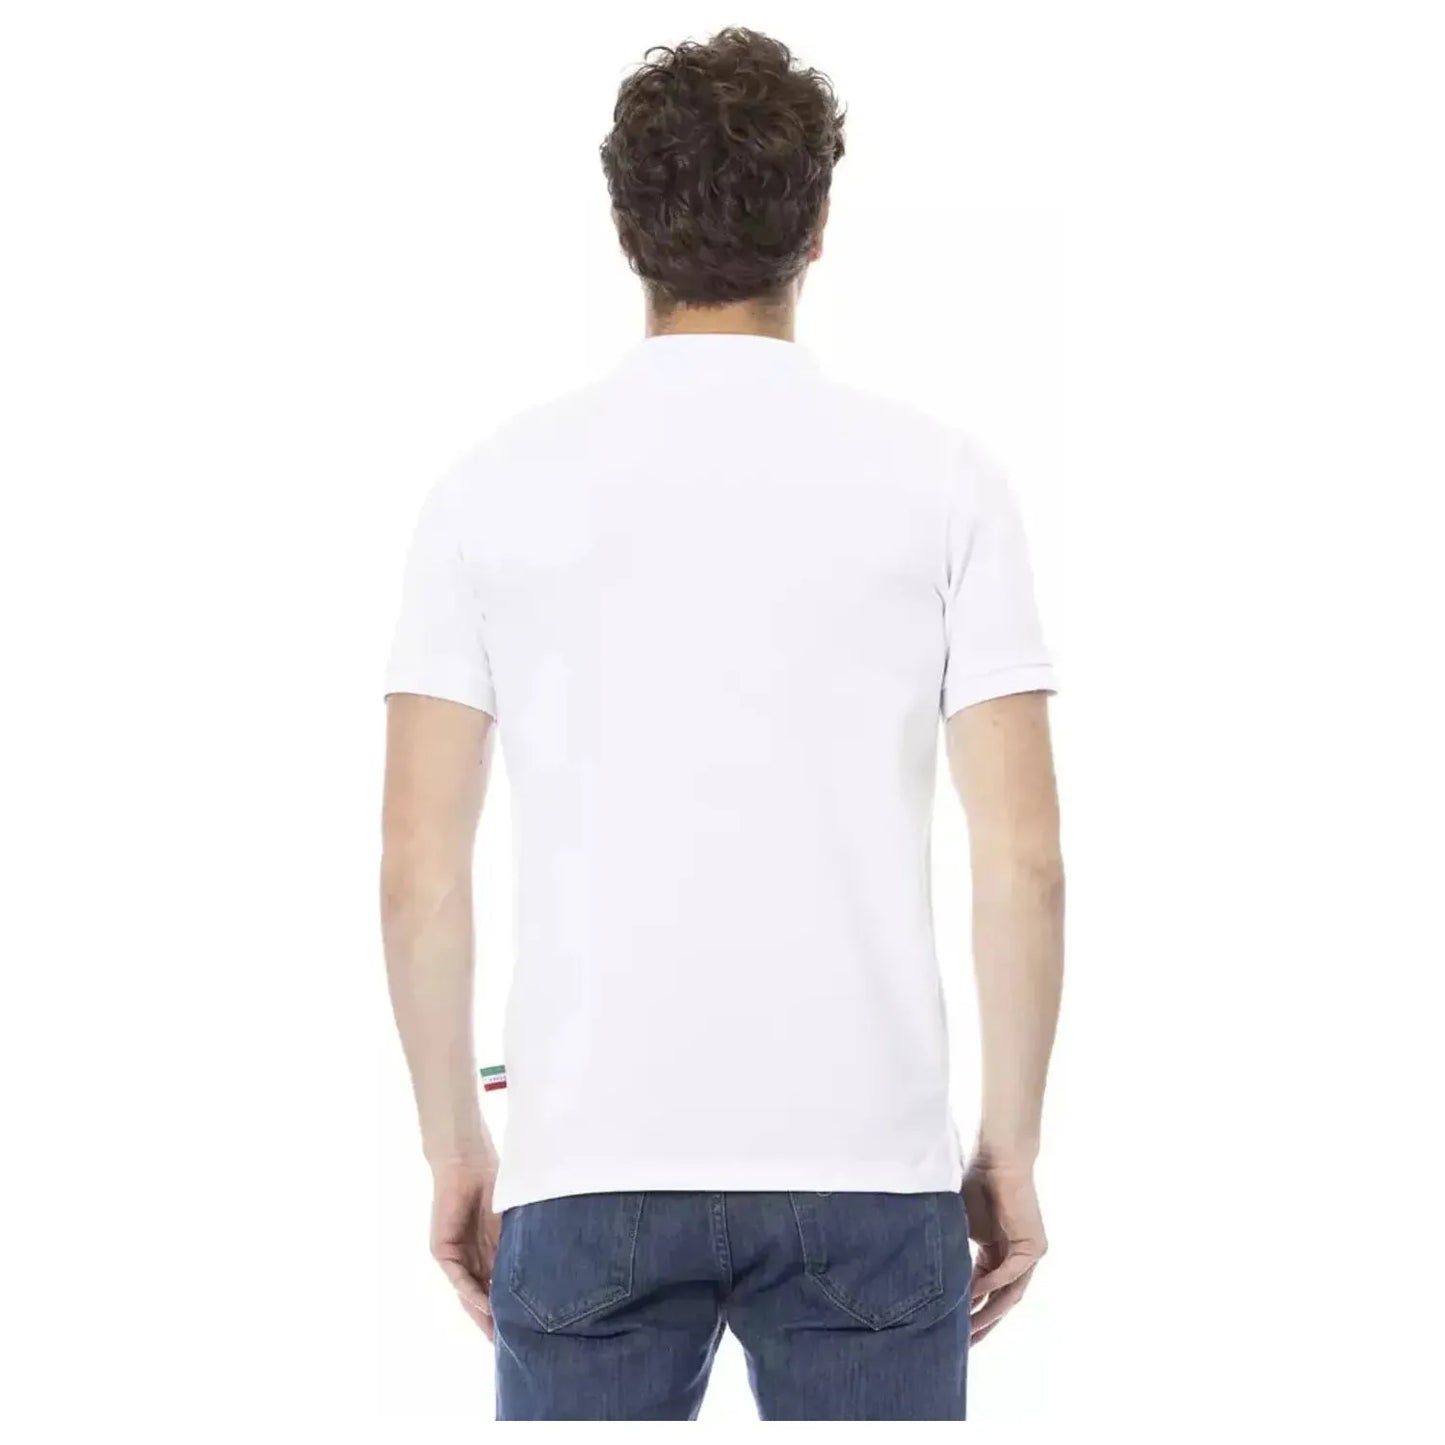 Baldinini Trend Elegant White Cotton Polo Shirt white-cotton-polo-shirt-19